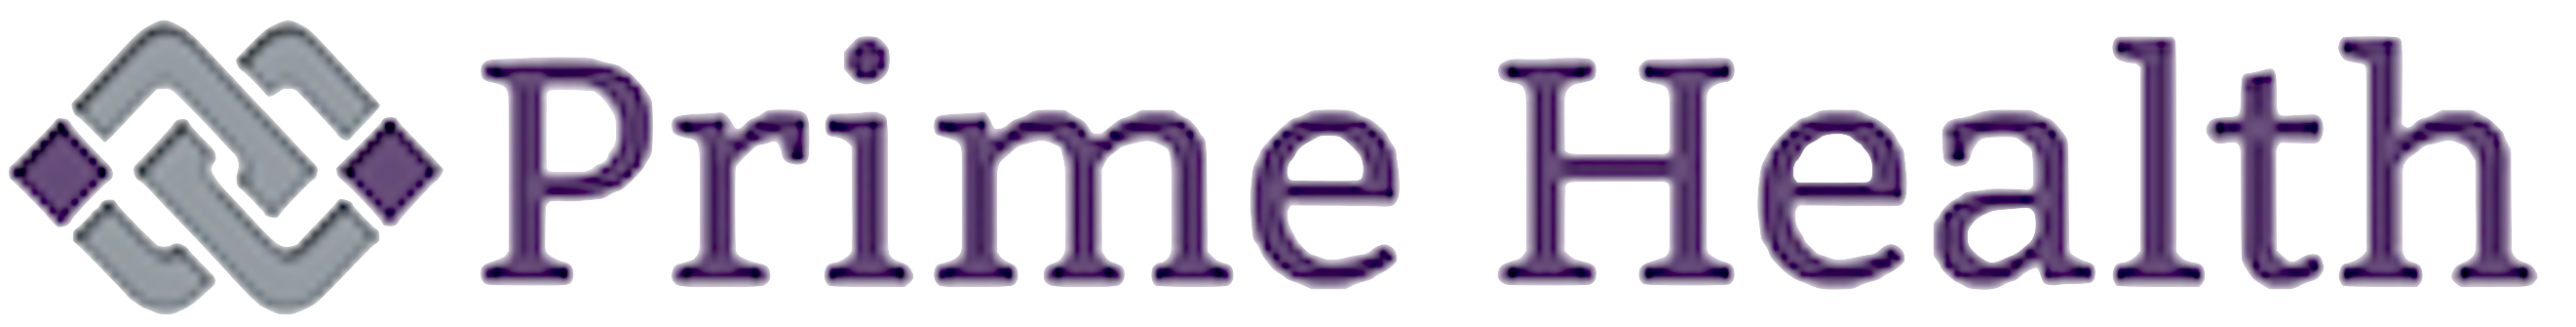 Prime health network logo